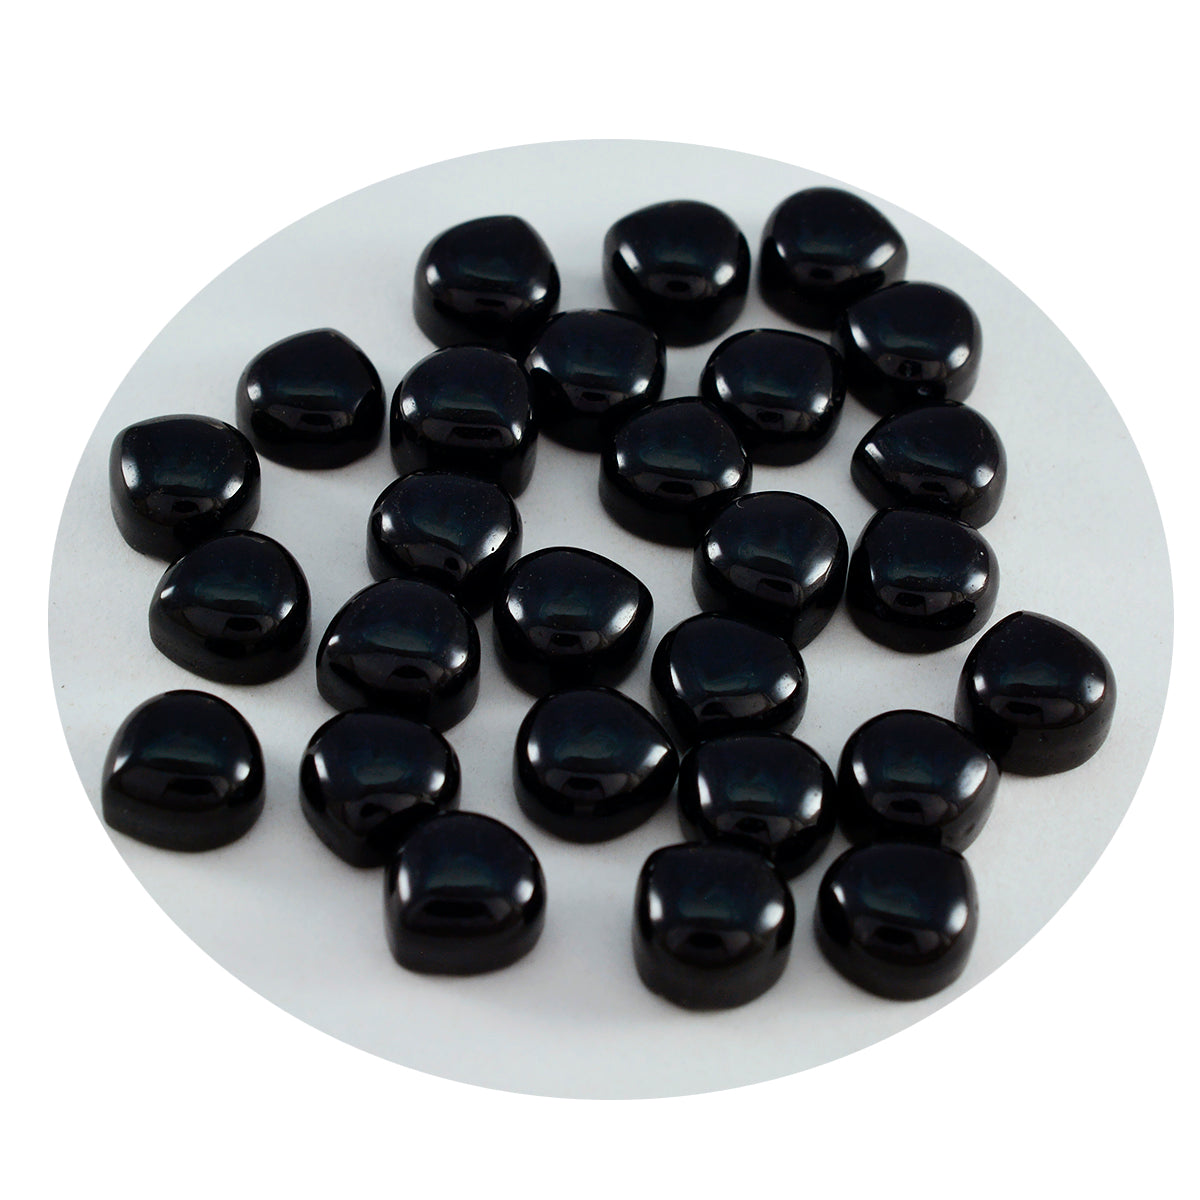 Riyogems 1PC Black Onyx Cabochon 6x6 mm hartvorm prachtige kwaliteit losse steen